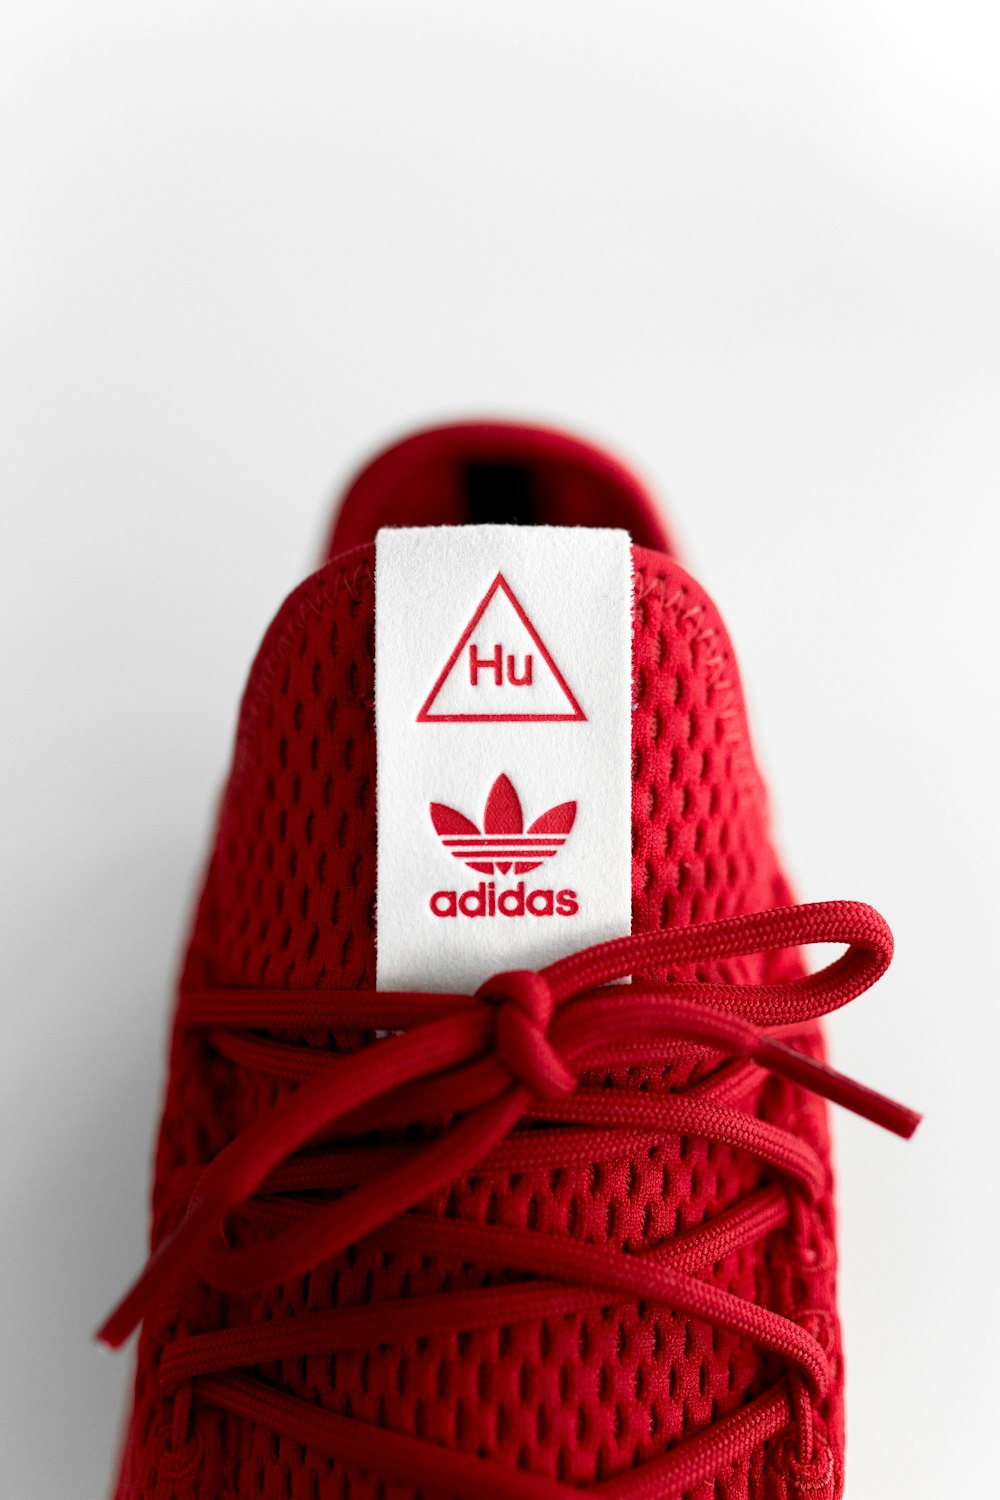 Foto Zapatilla Adidas roja sin emparejar – Imagen Moda gratis en Unsplash